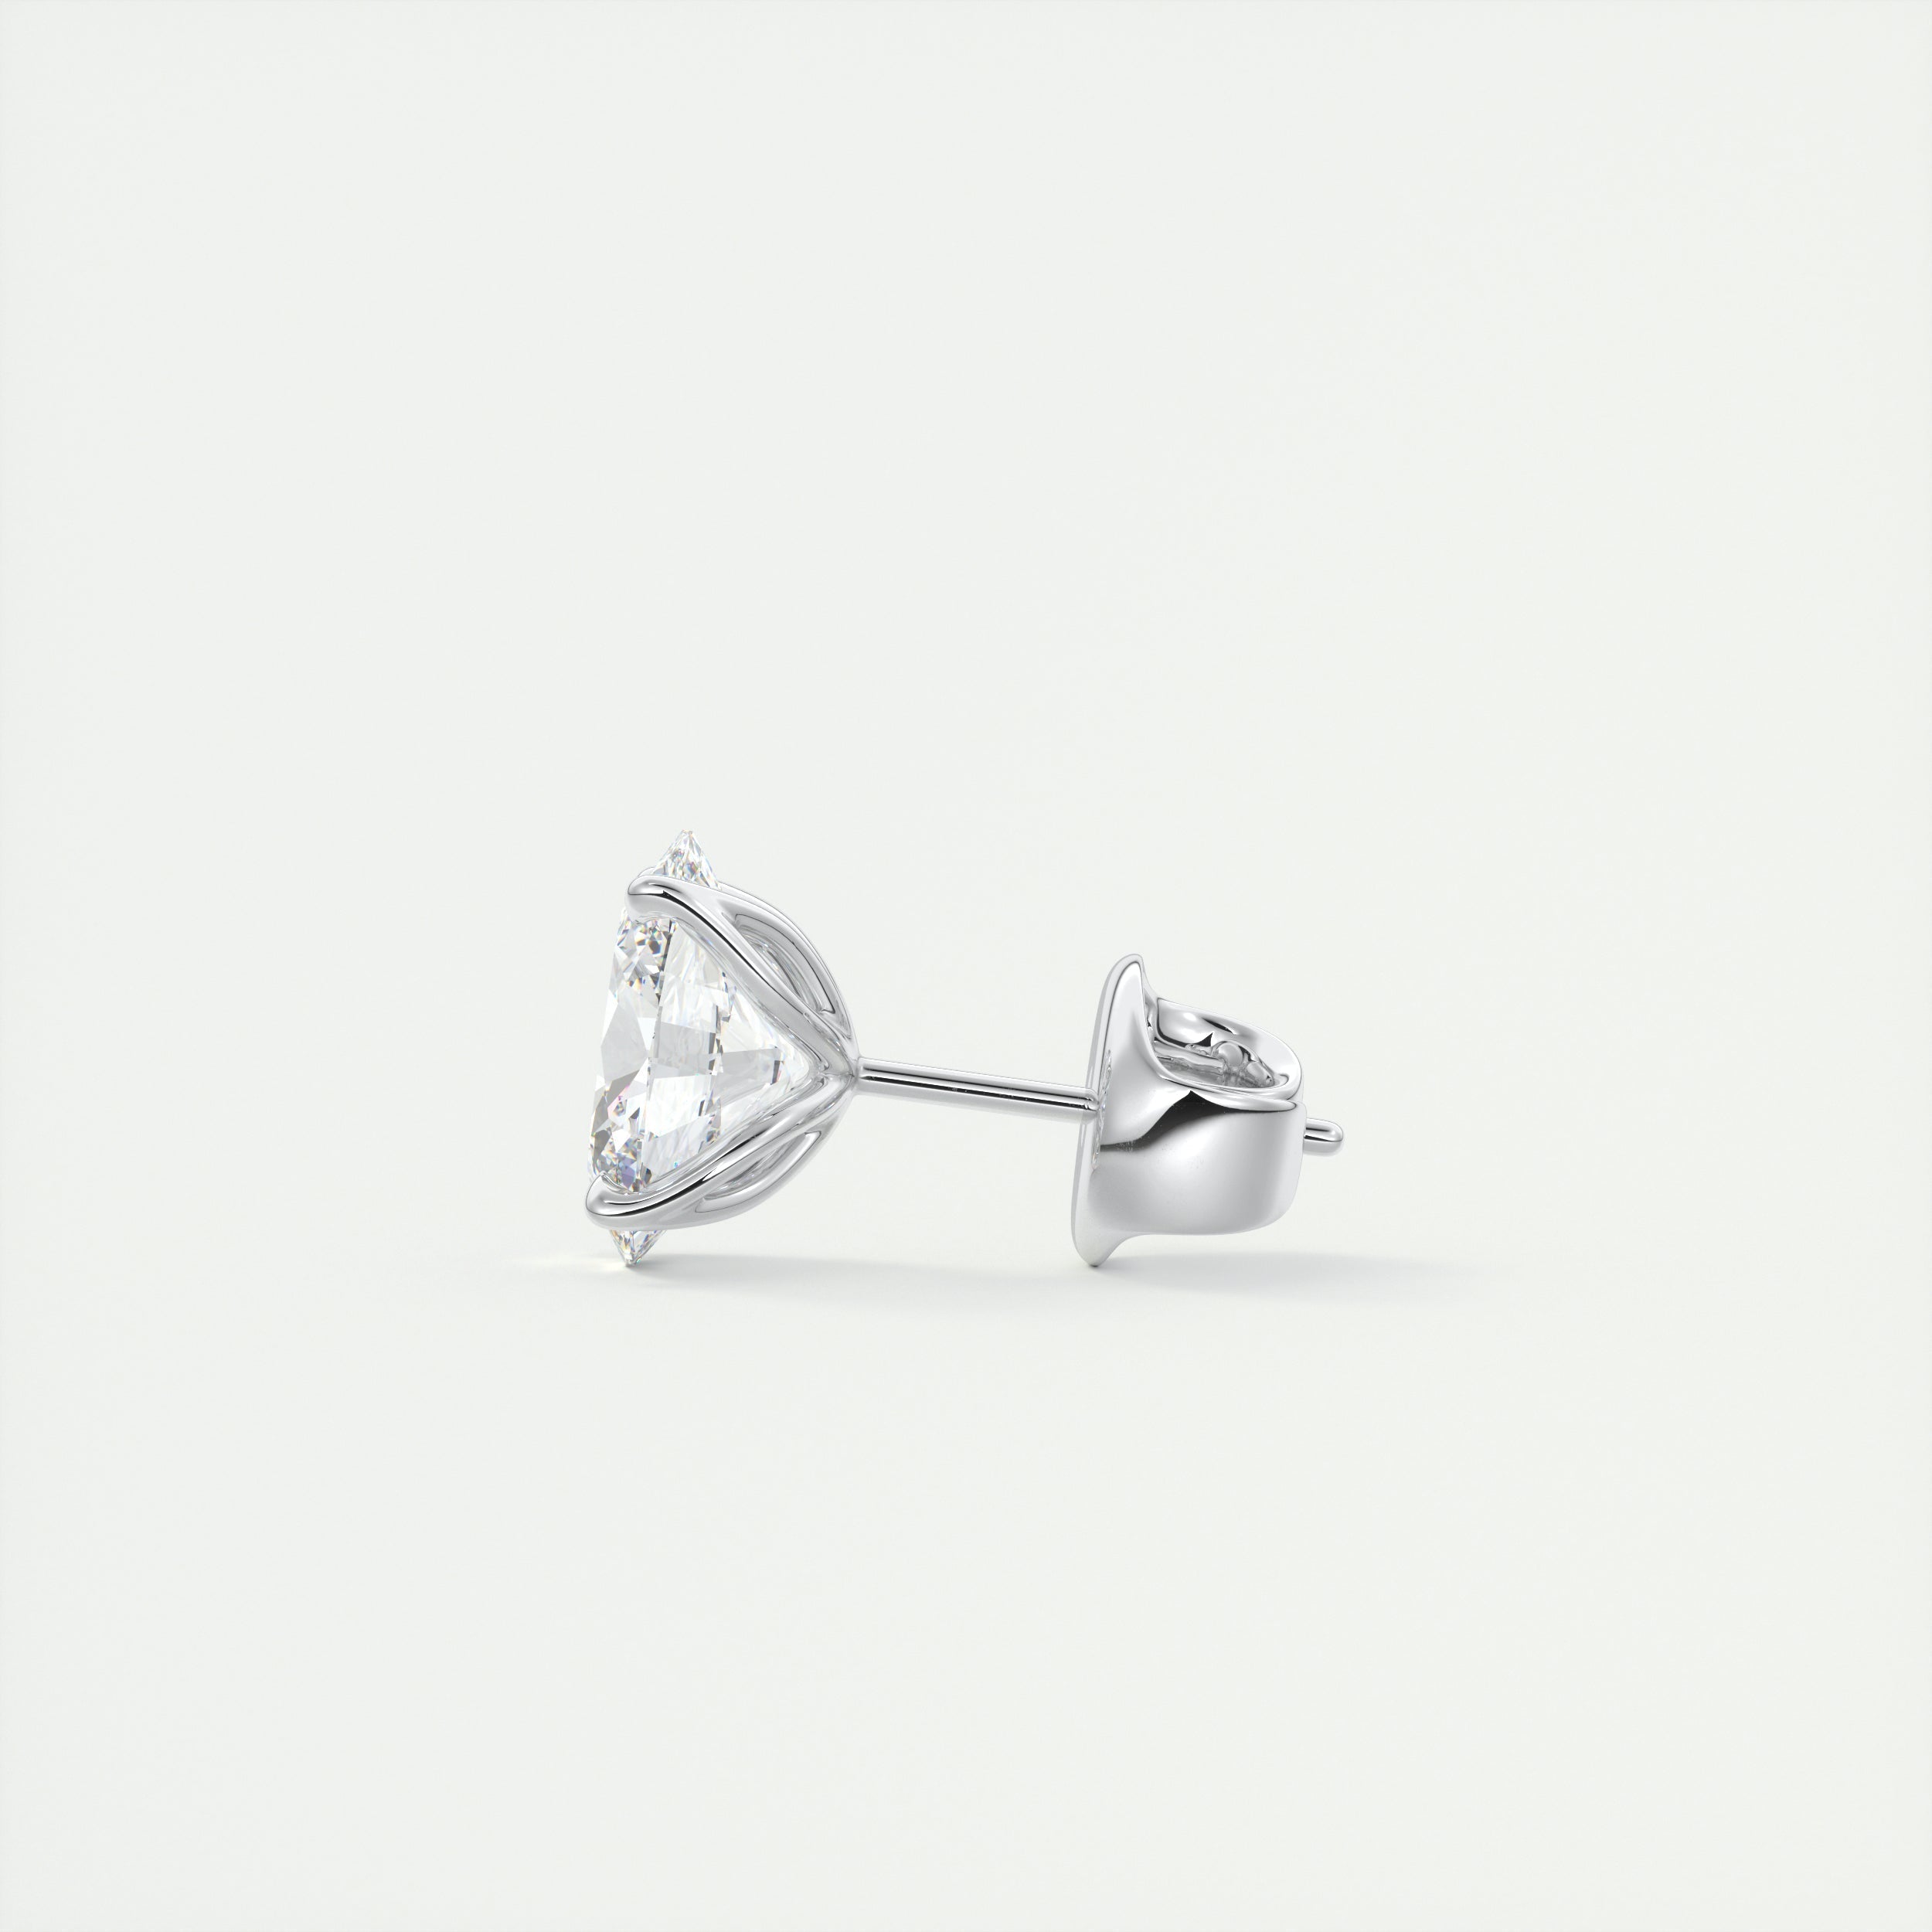 1.0 CT Oval Solitaire CVD G/VS Diamond Earrings 4